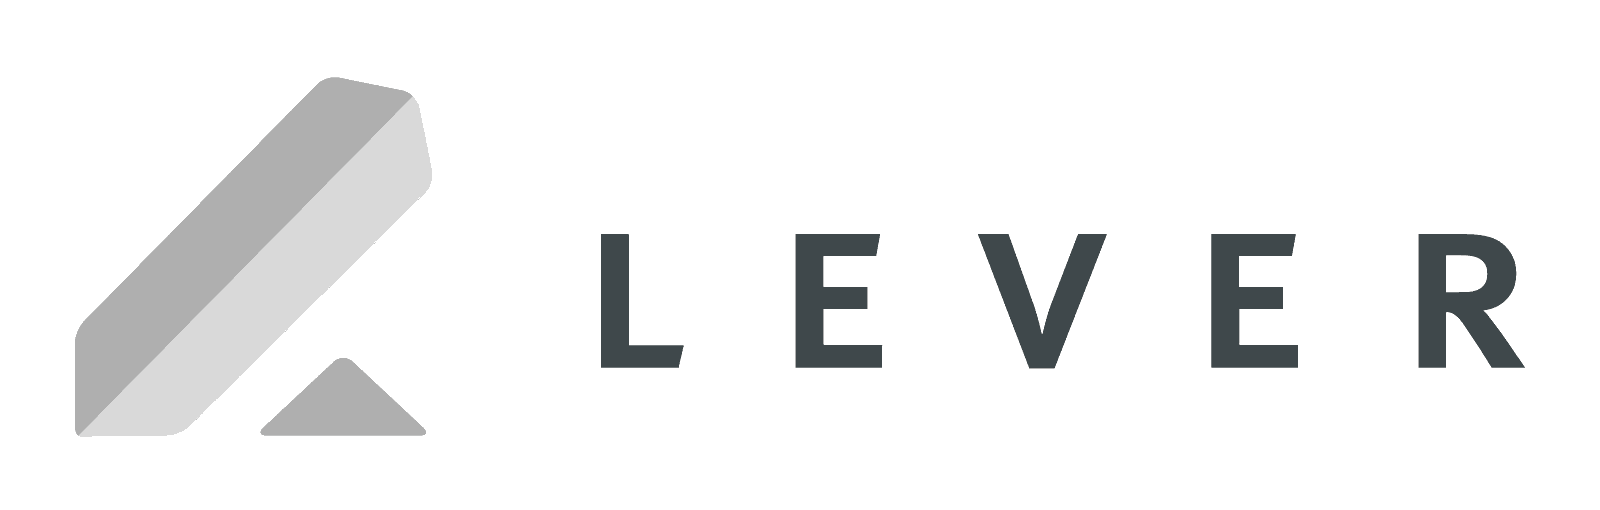 Lever-logo-transprnt